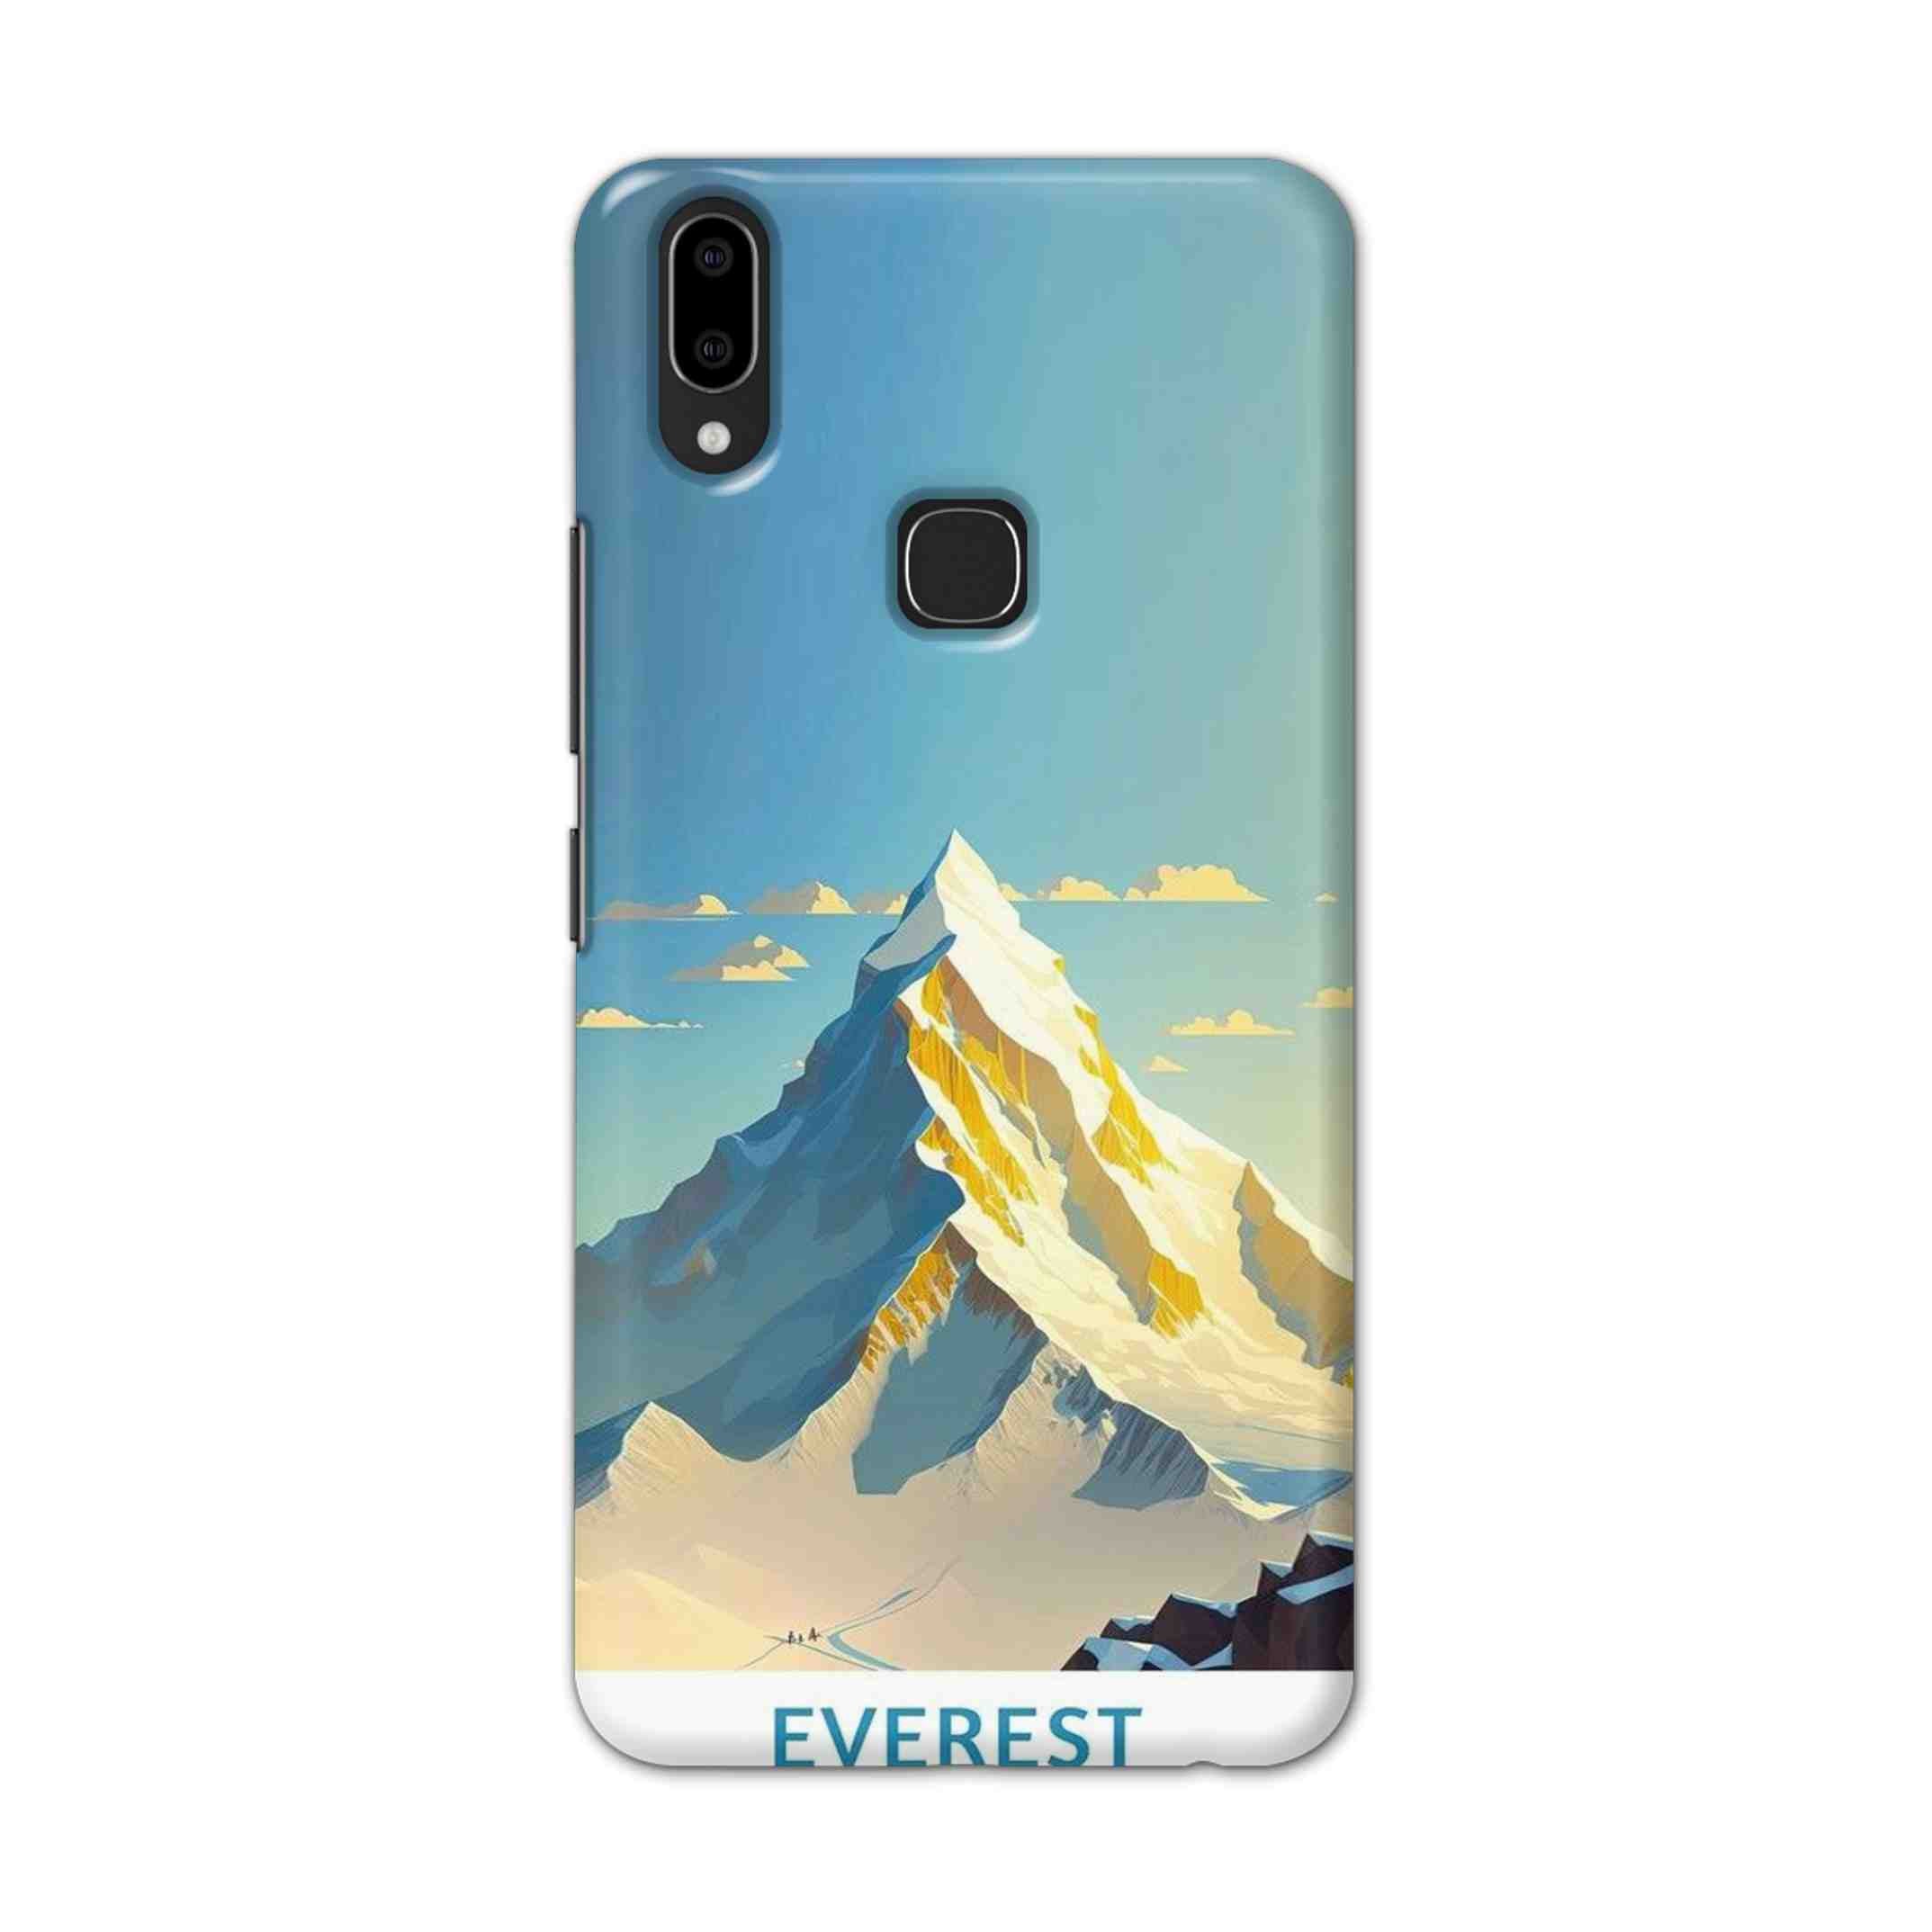 Buy Everest Hard Back Mobile Phone Case Cover For Vivo V9 / V9 Youth Online